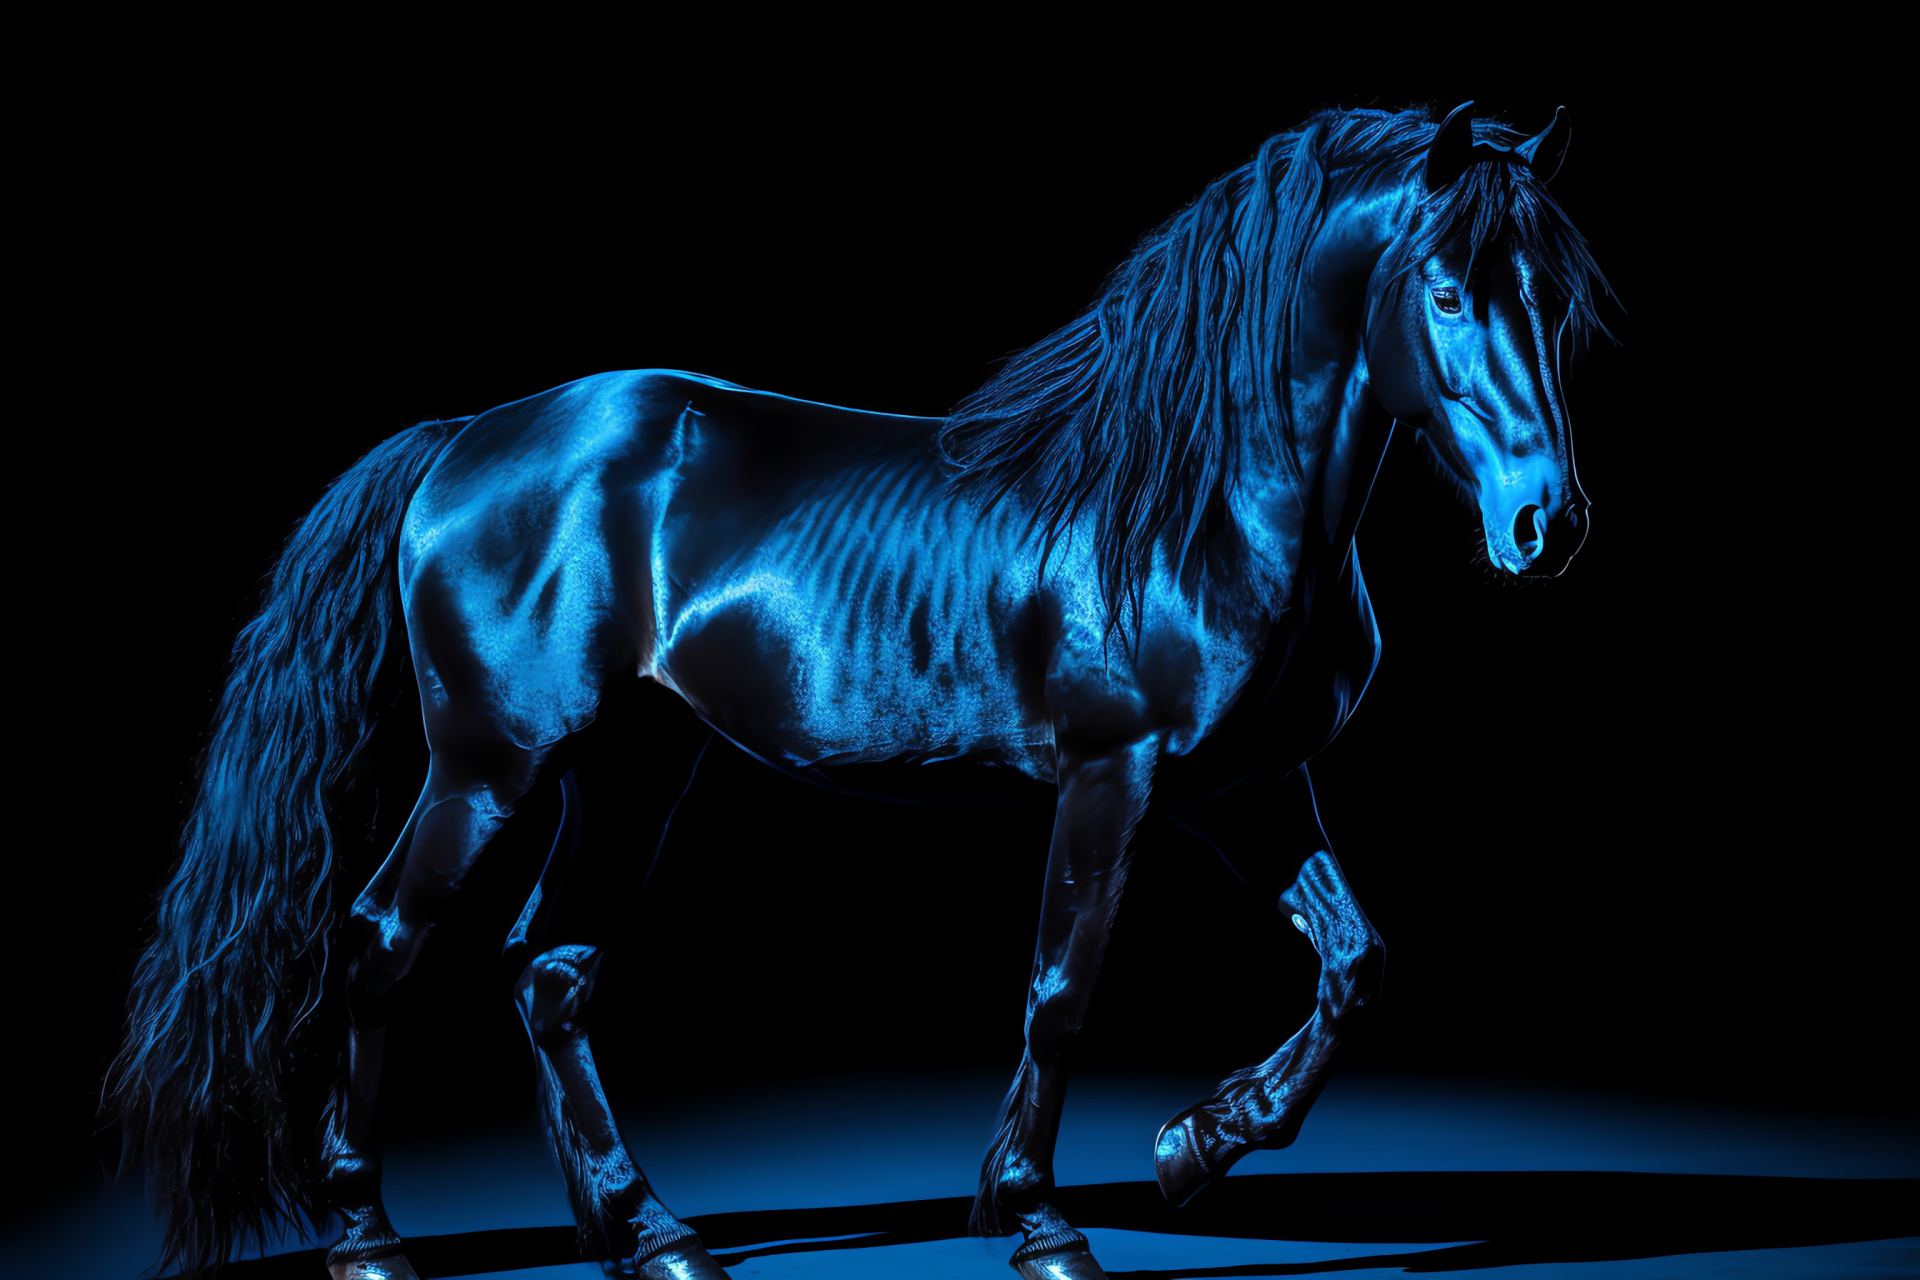 Wild Horse vigor, Muscular equine, Blue coat rarity, Free-roaming stallion, Black background solitude, HD Desktop Image